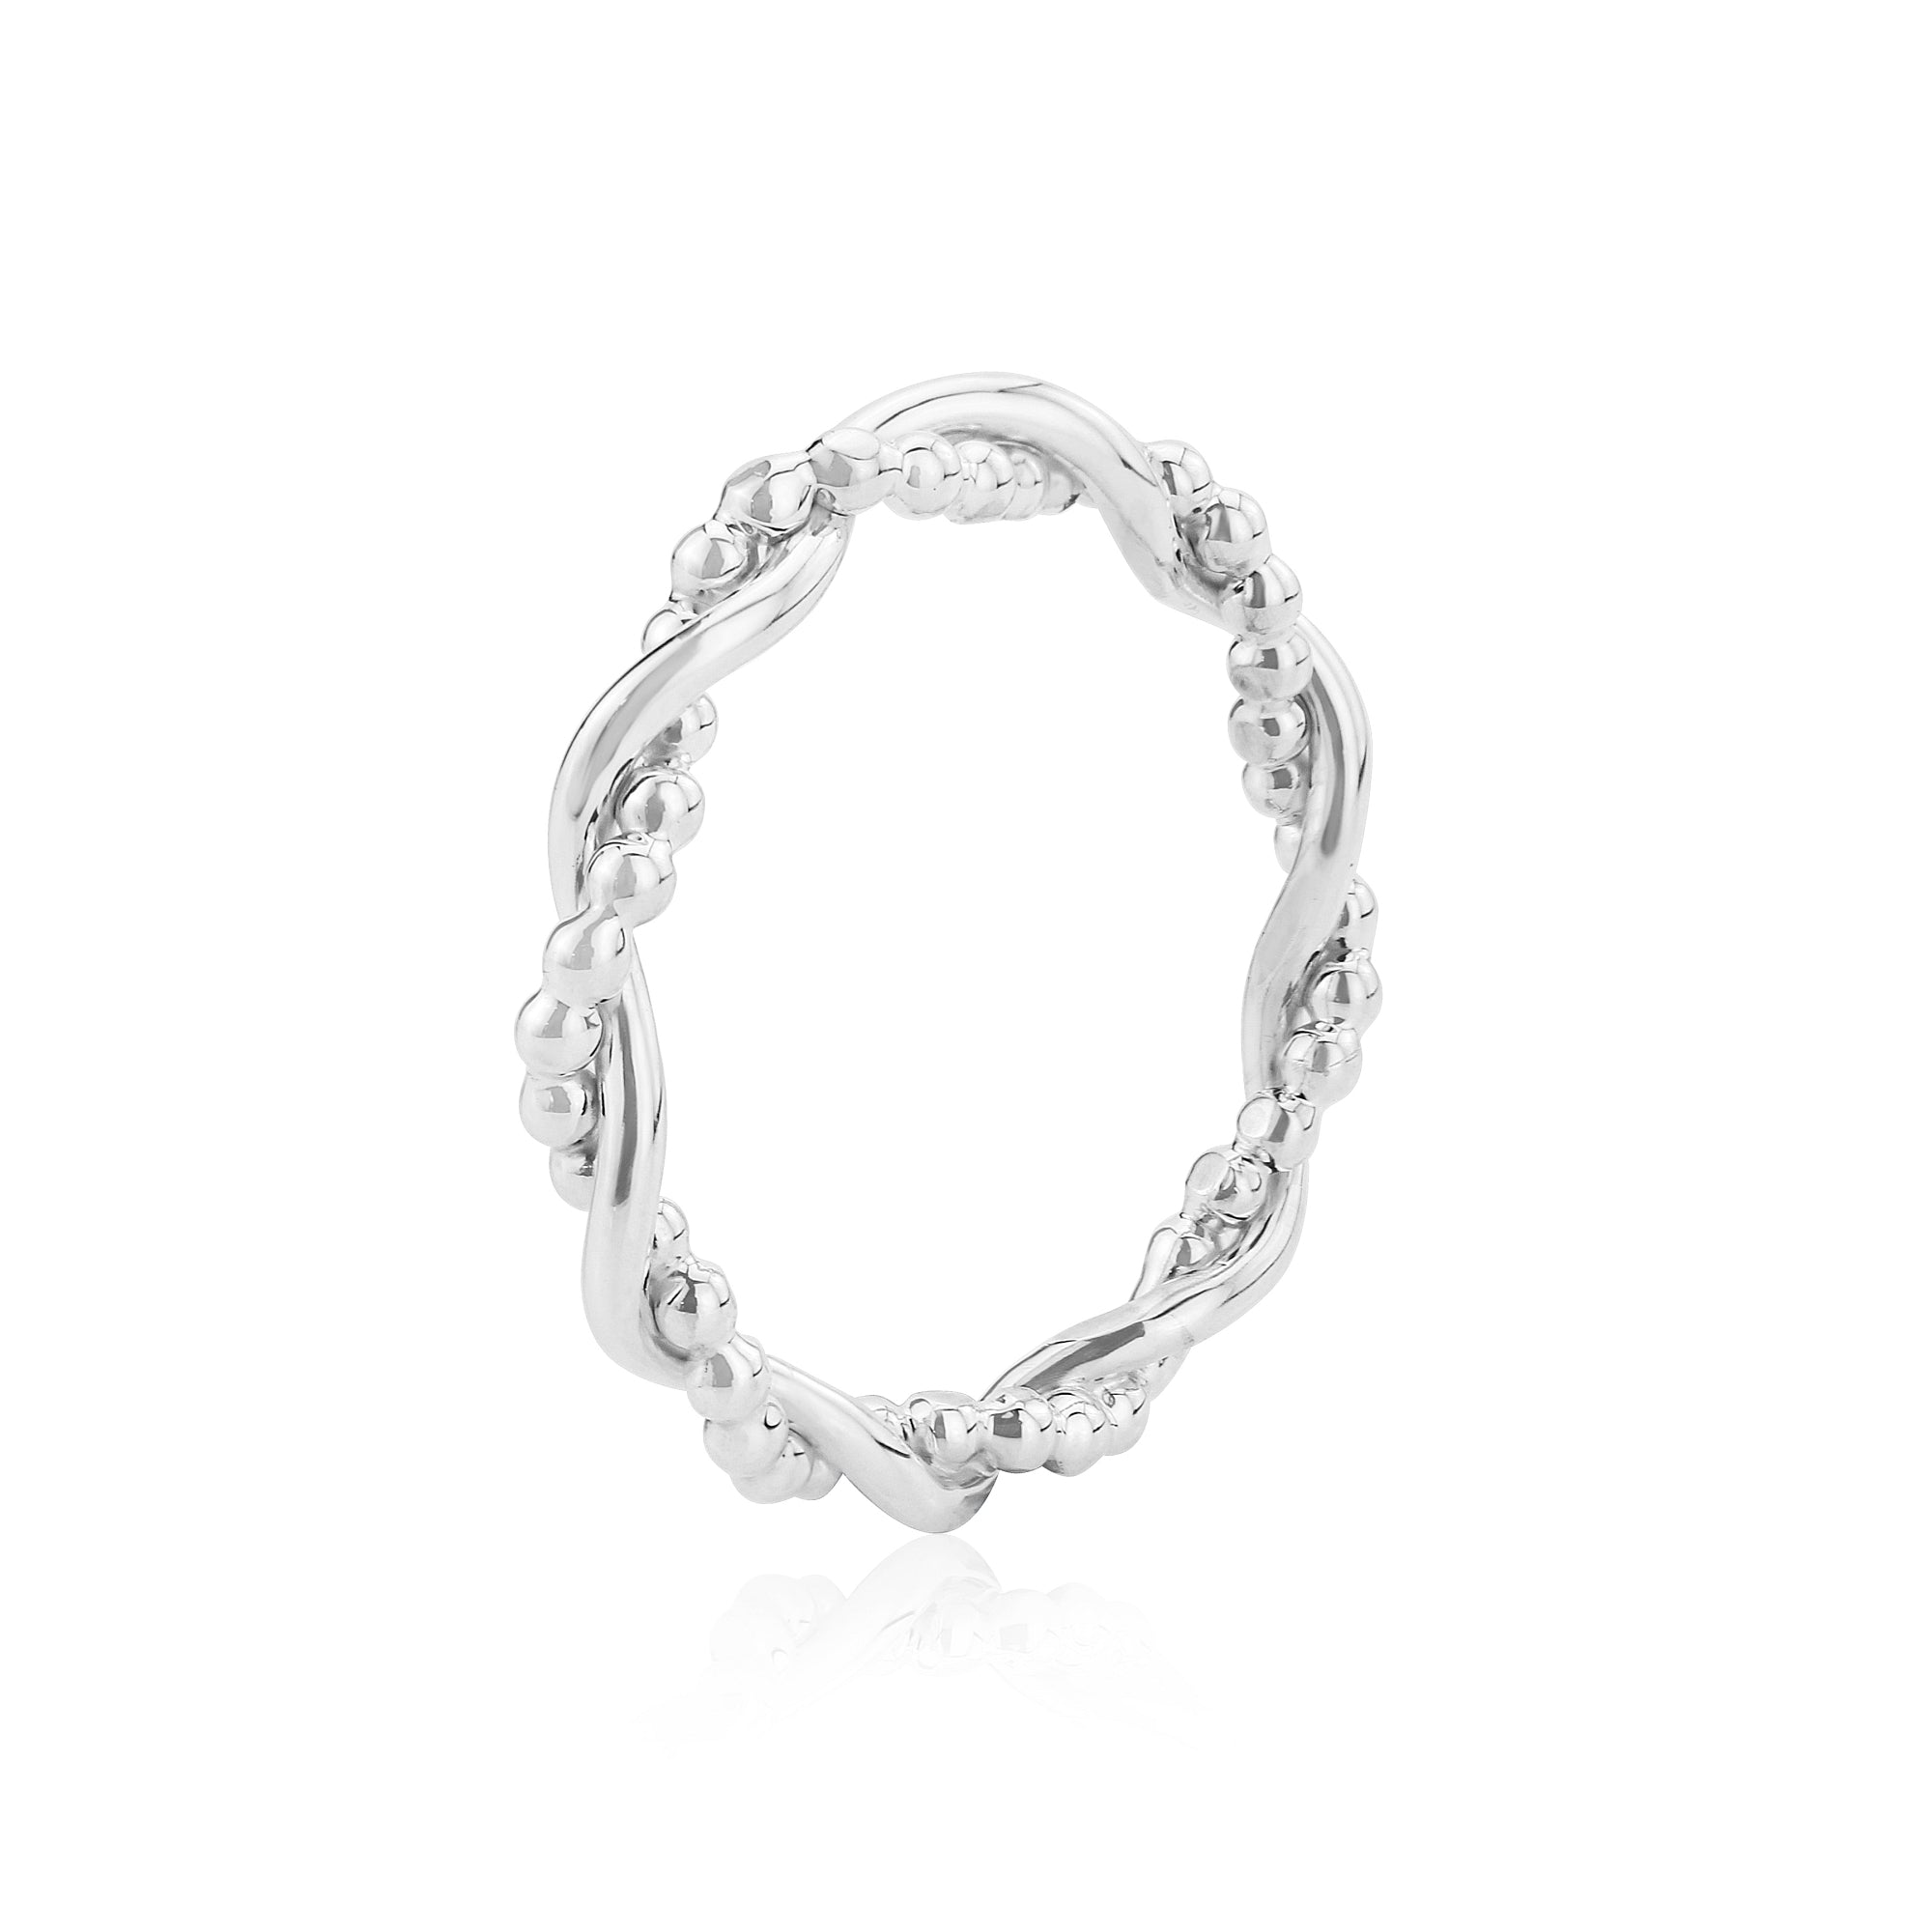 Handmade Silver Twisted Bramble Ring